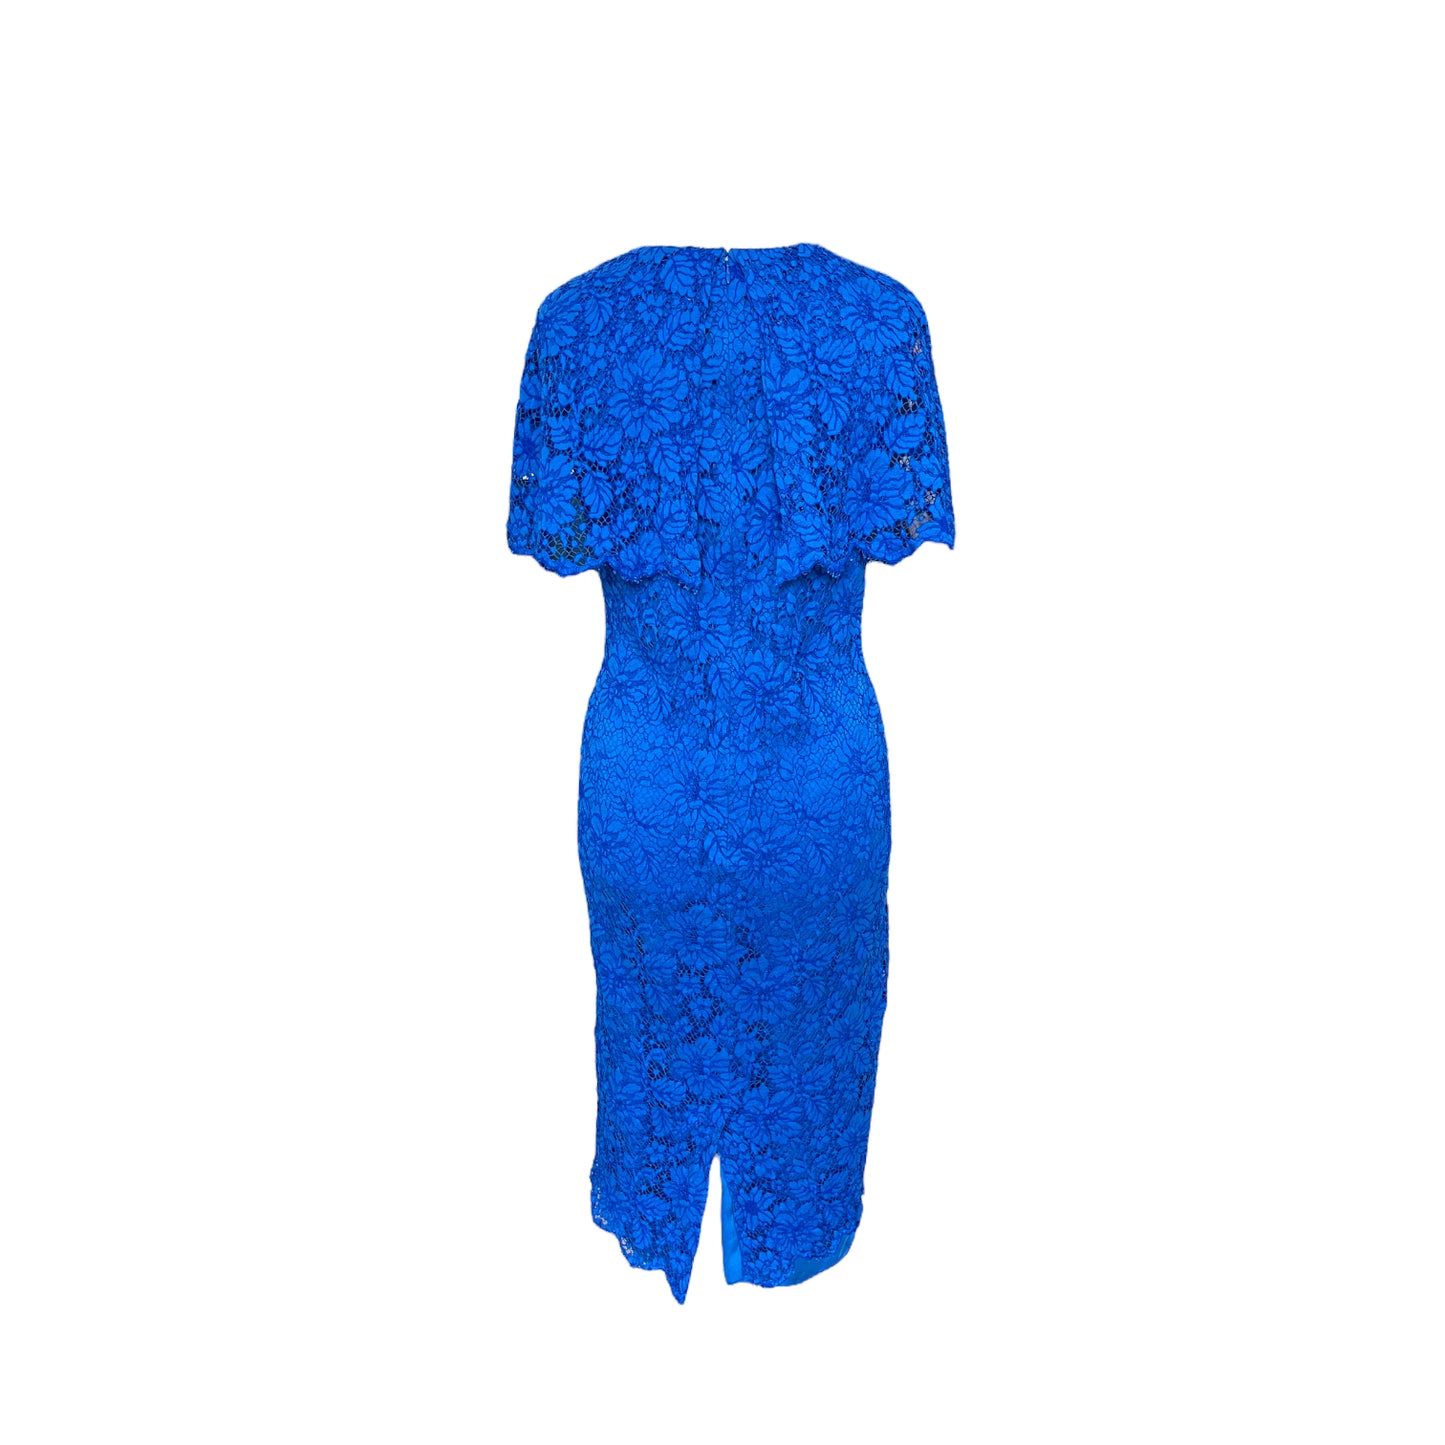 CURRENT SEASON Louise Kennedy Cobalt Blue Lace Dress